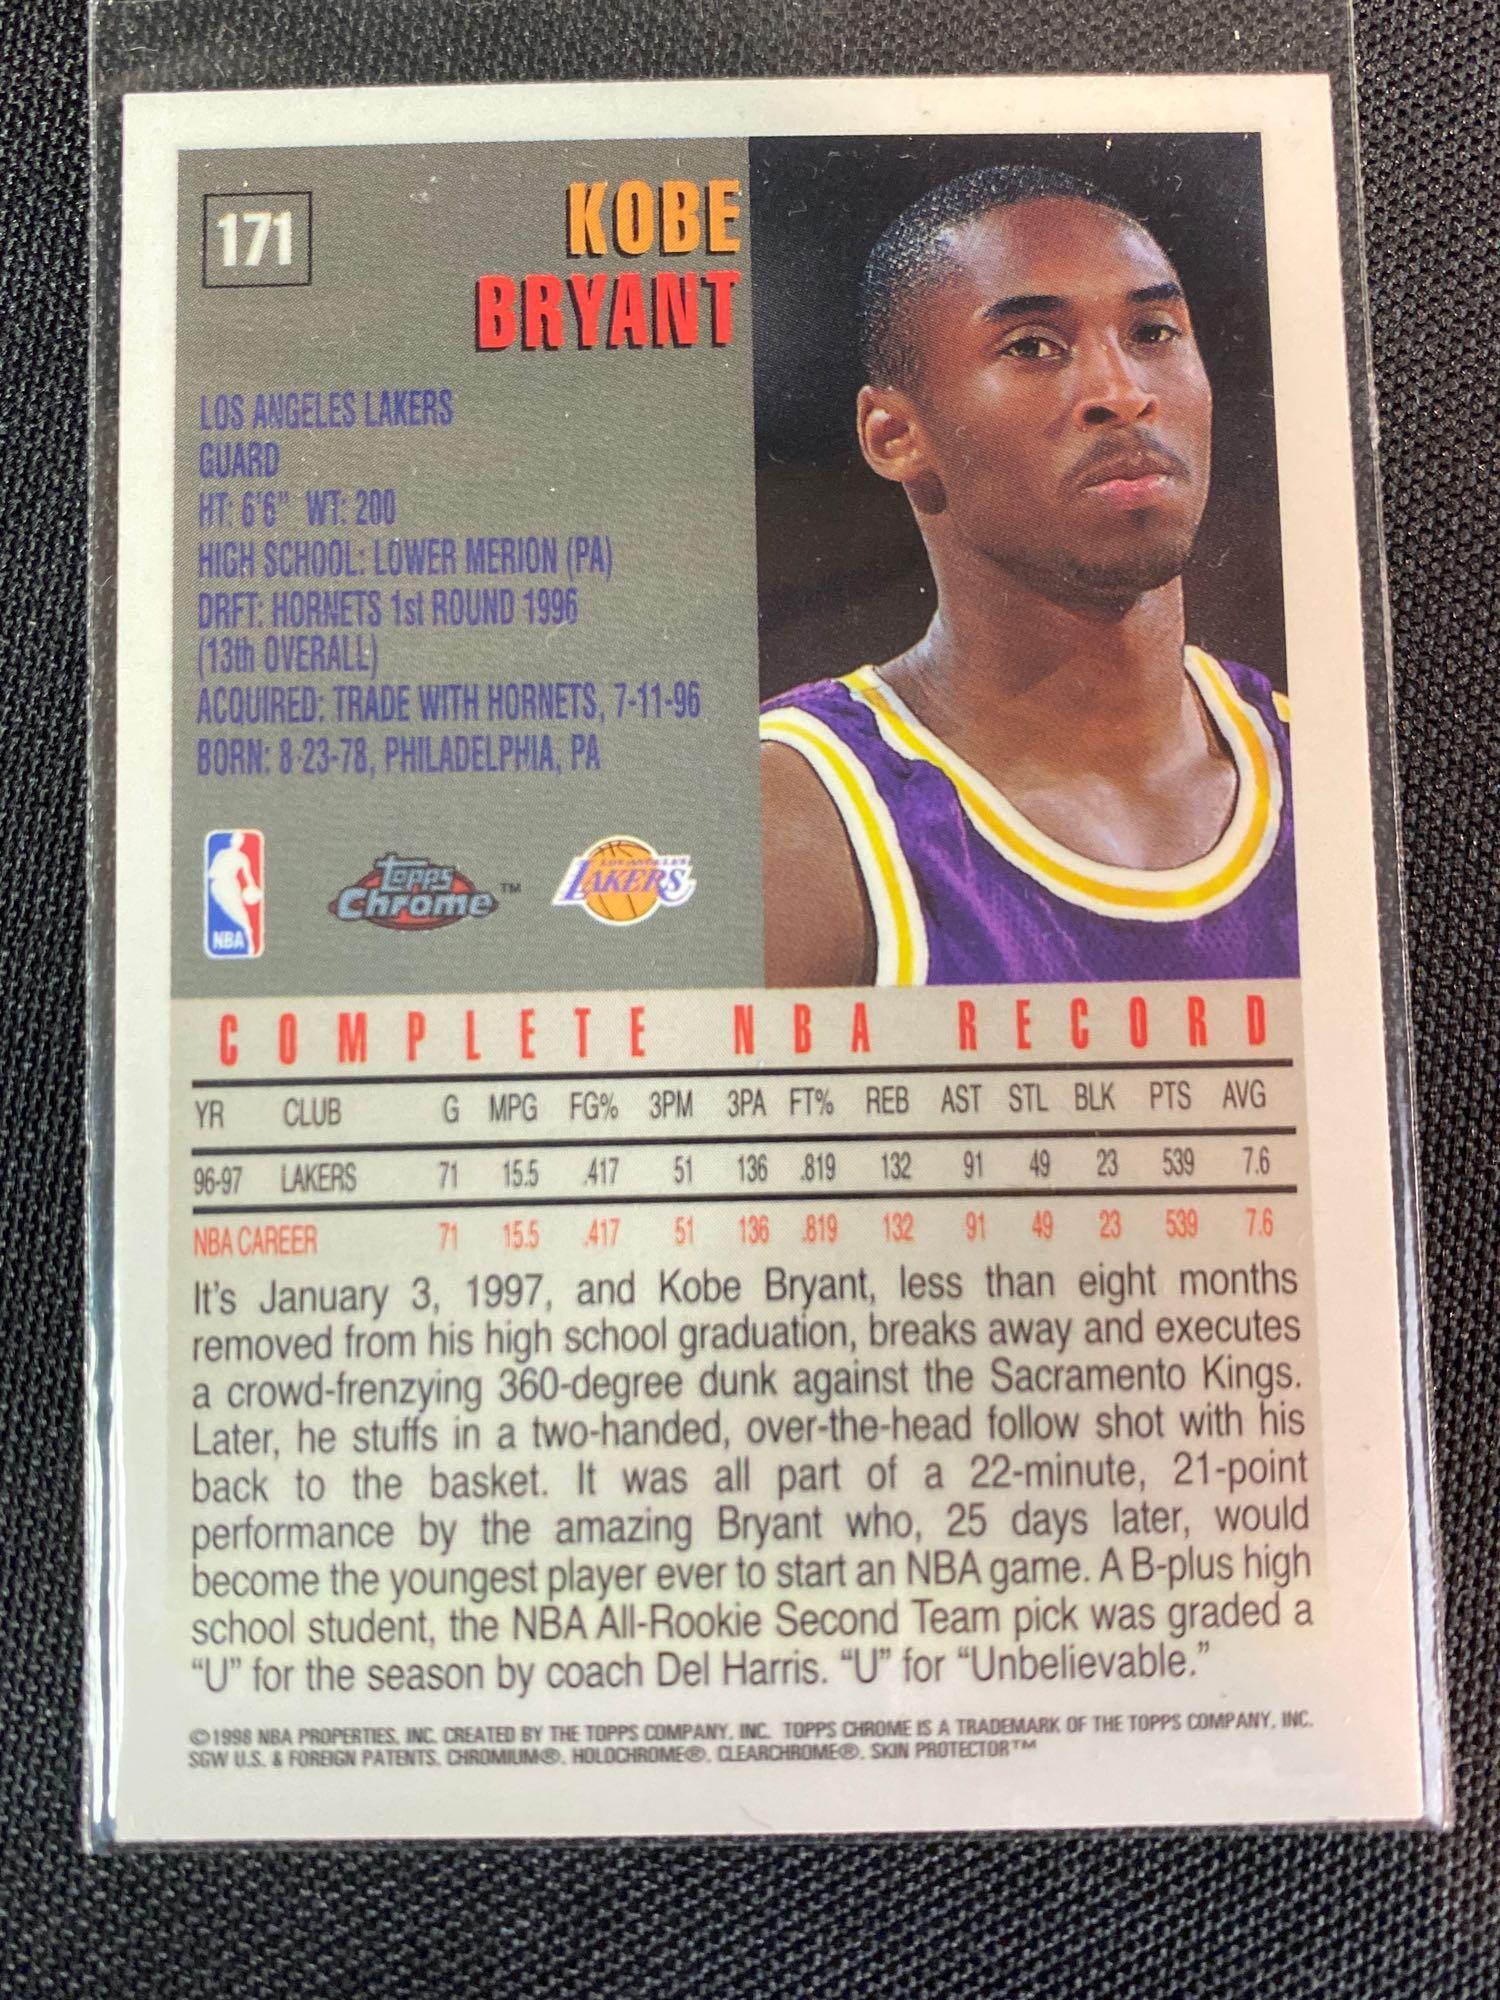 1998 Topps Chrome Kobe Bryant #171